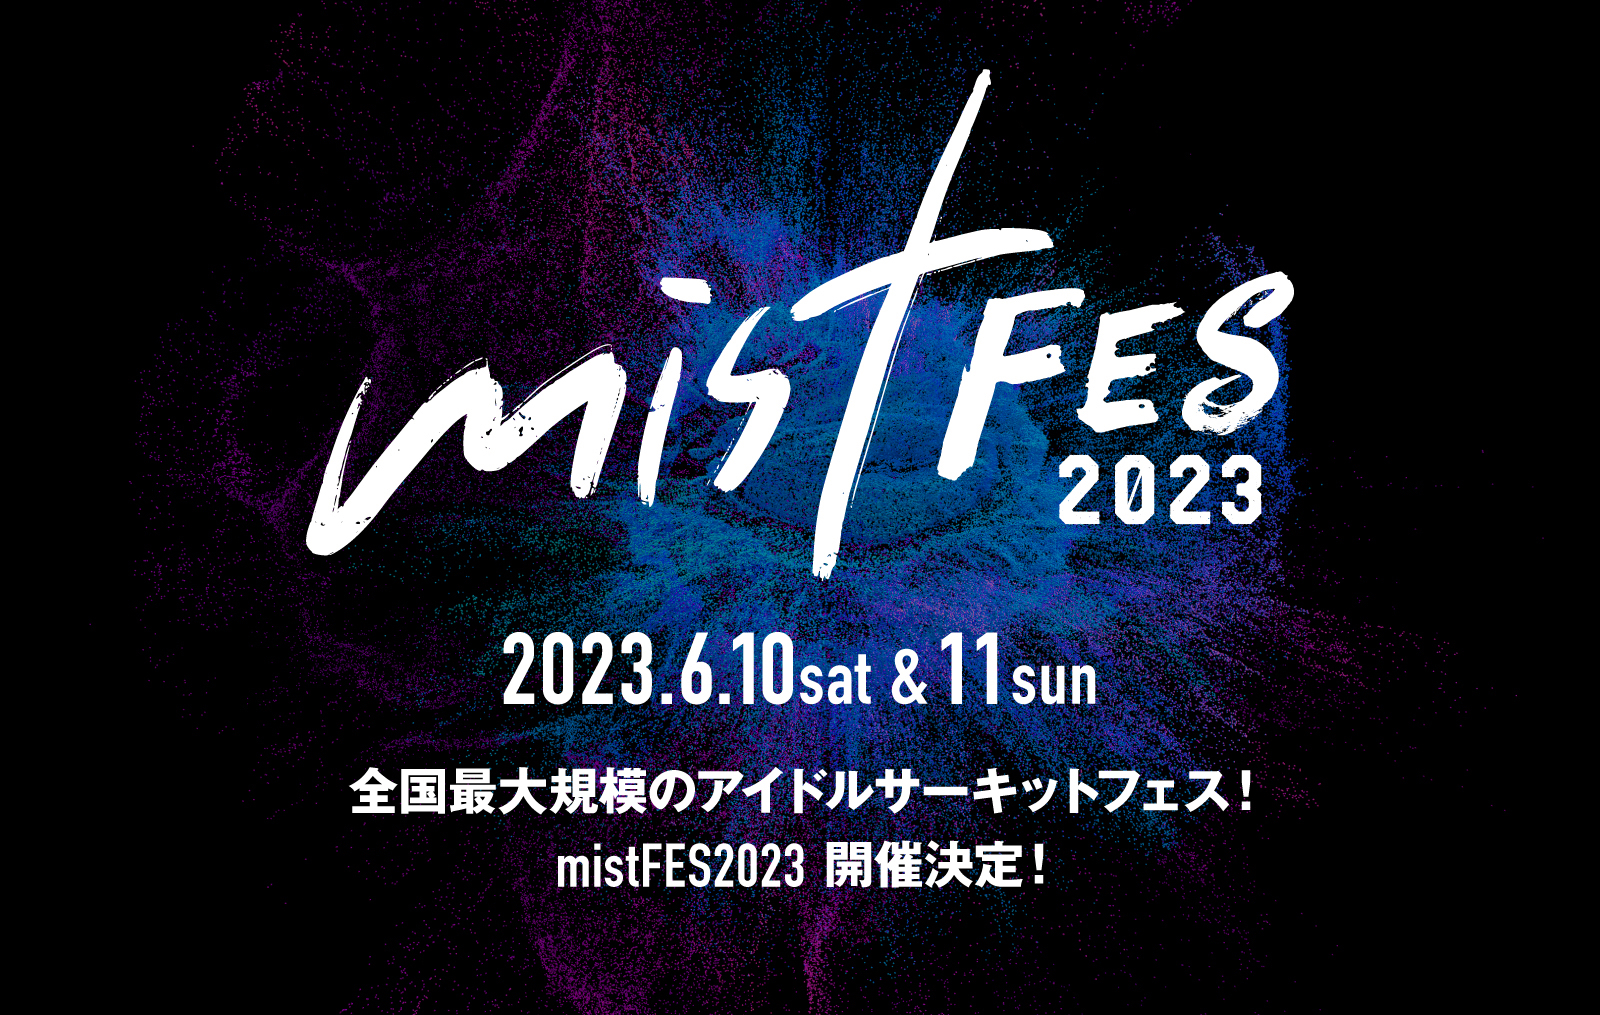 mistFES 2023